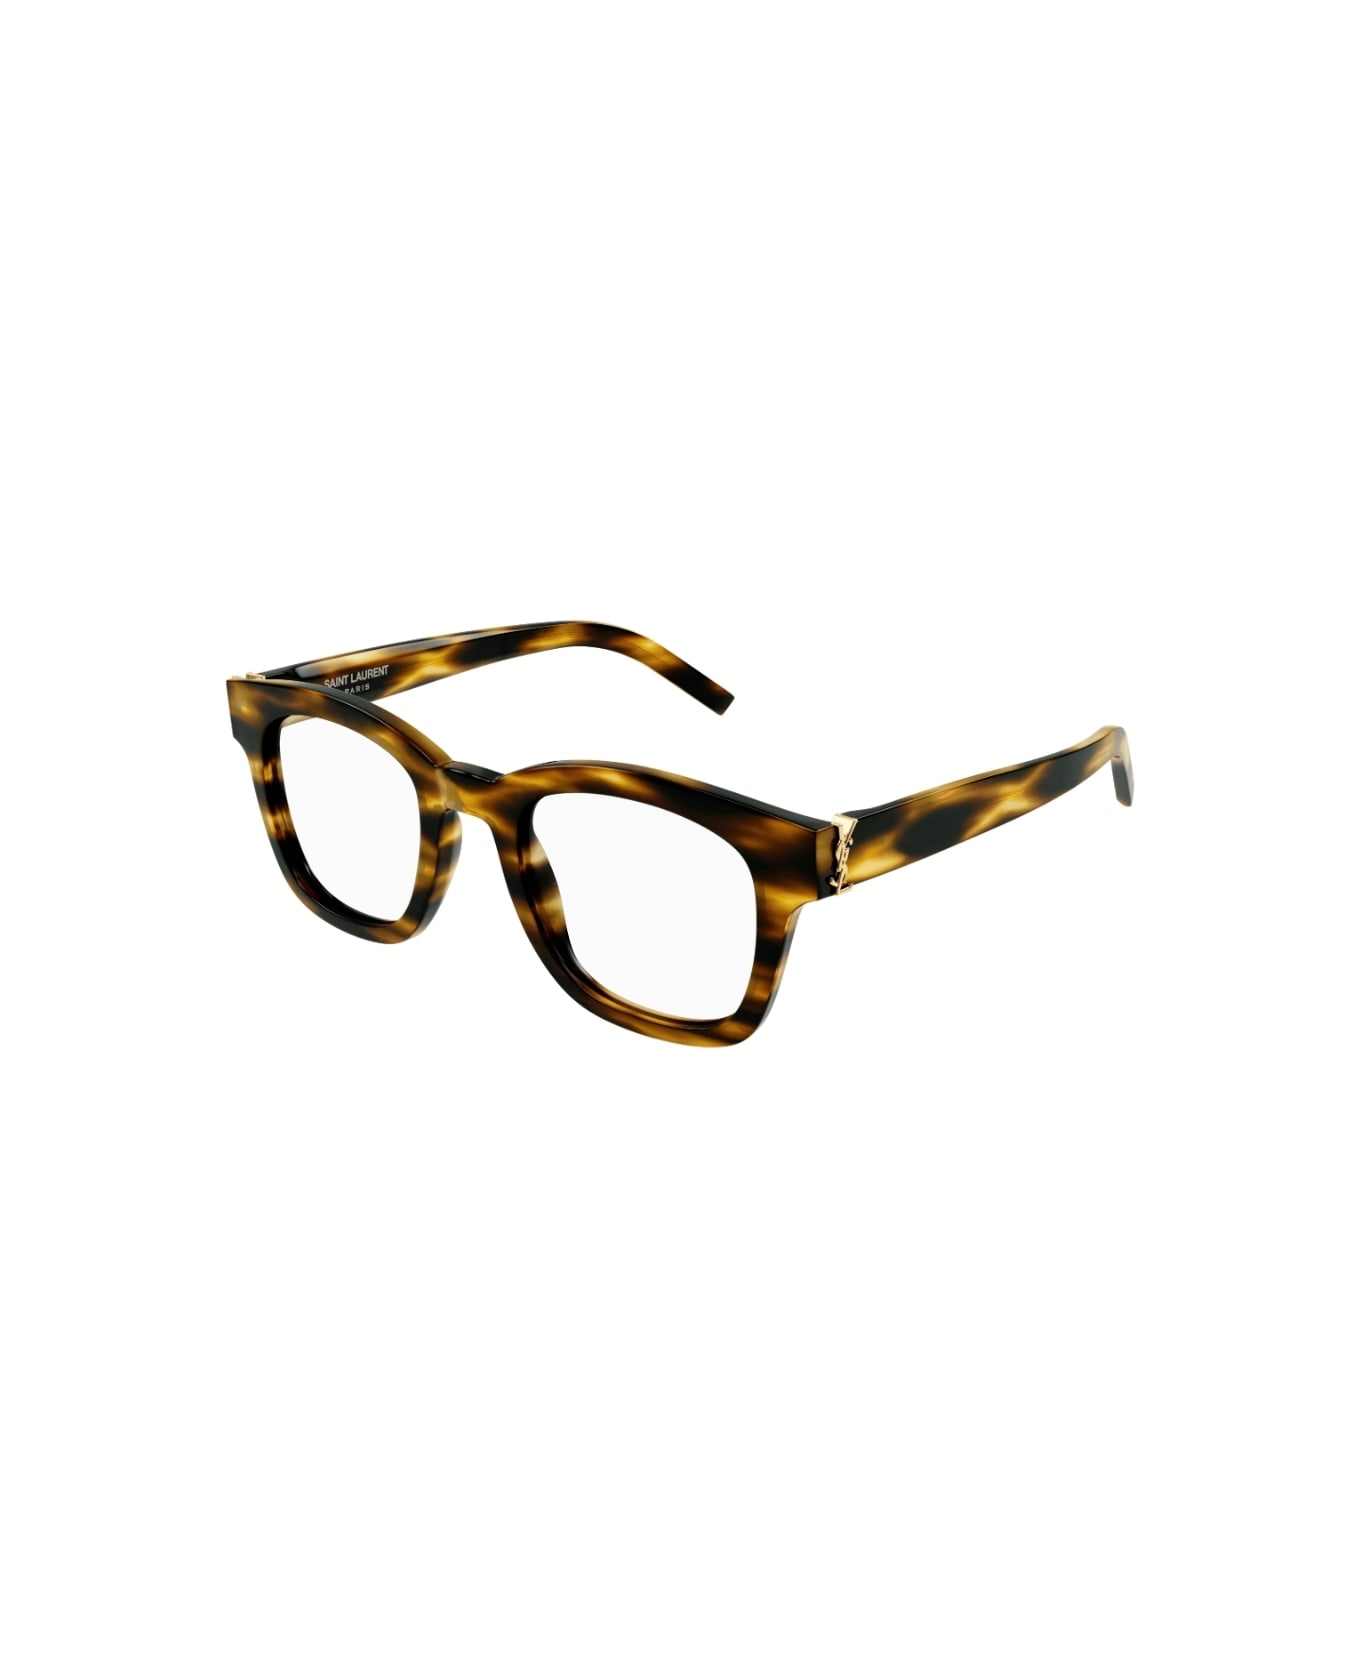 Saint Laurent Eyewear SL M124 003 Glasses